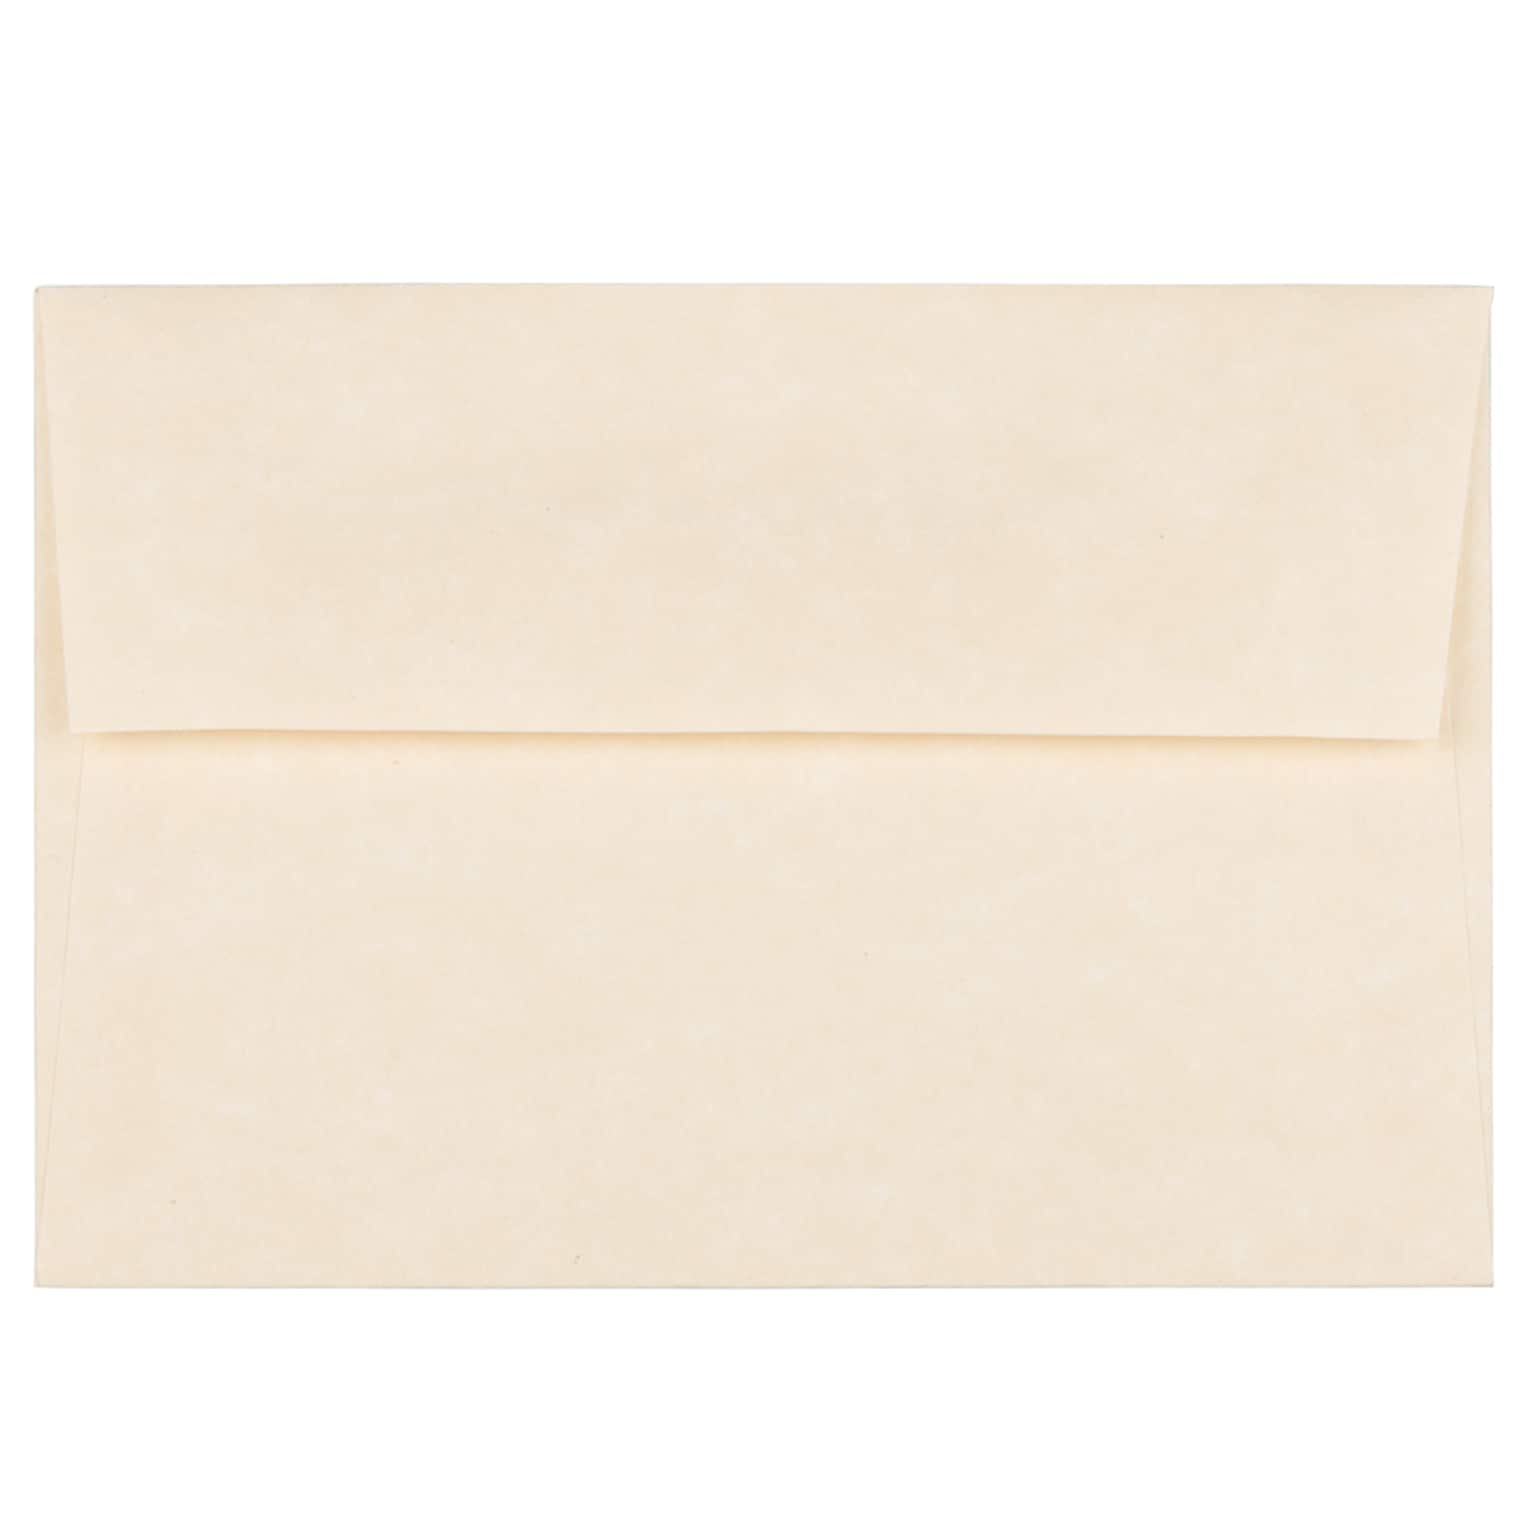 JAM Paper® 4Bar A1 Parchment Invitation Envelopes, 3.625 x 5.125, Natural Recycled, Bulk 250/Box (900795107H)